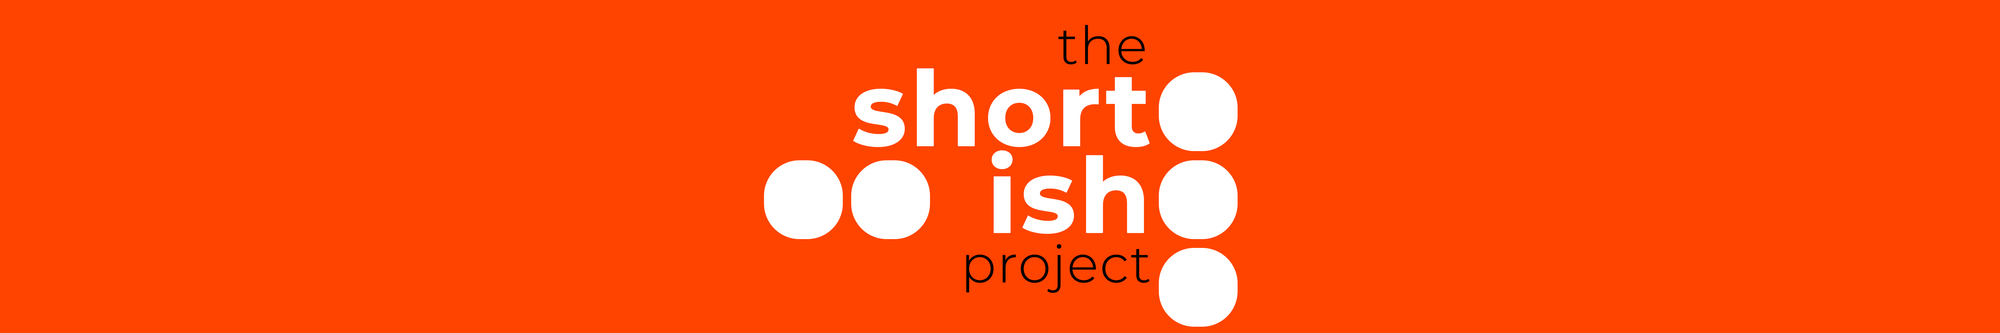 11 original short novels published by The Shortish Project